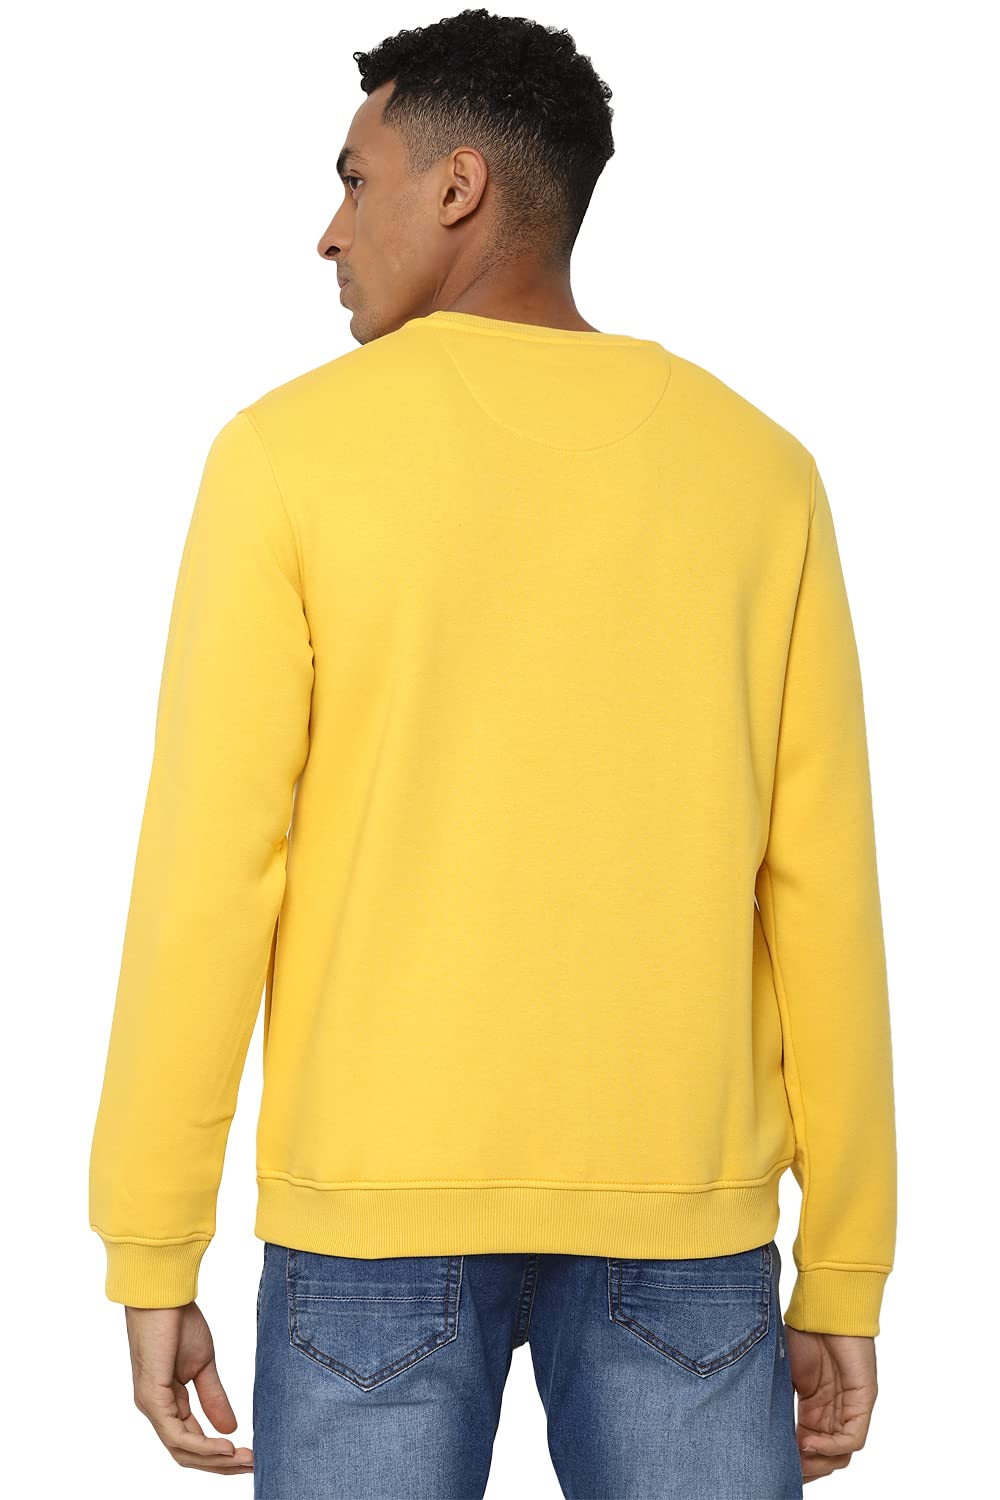 Allen Solly Men's Cotton Blend Round Neck Sweatshirt (ASSTCRGFJ27379_Yellow_S) 